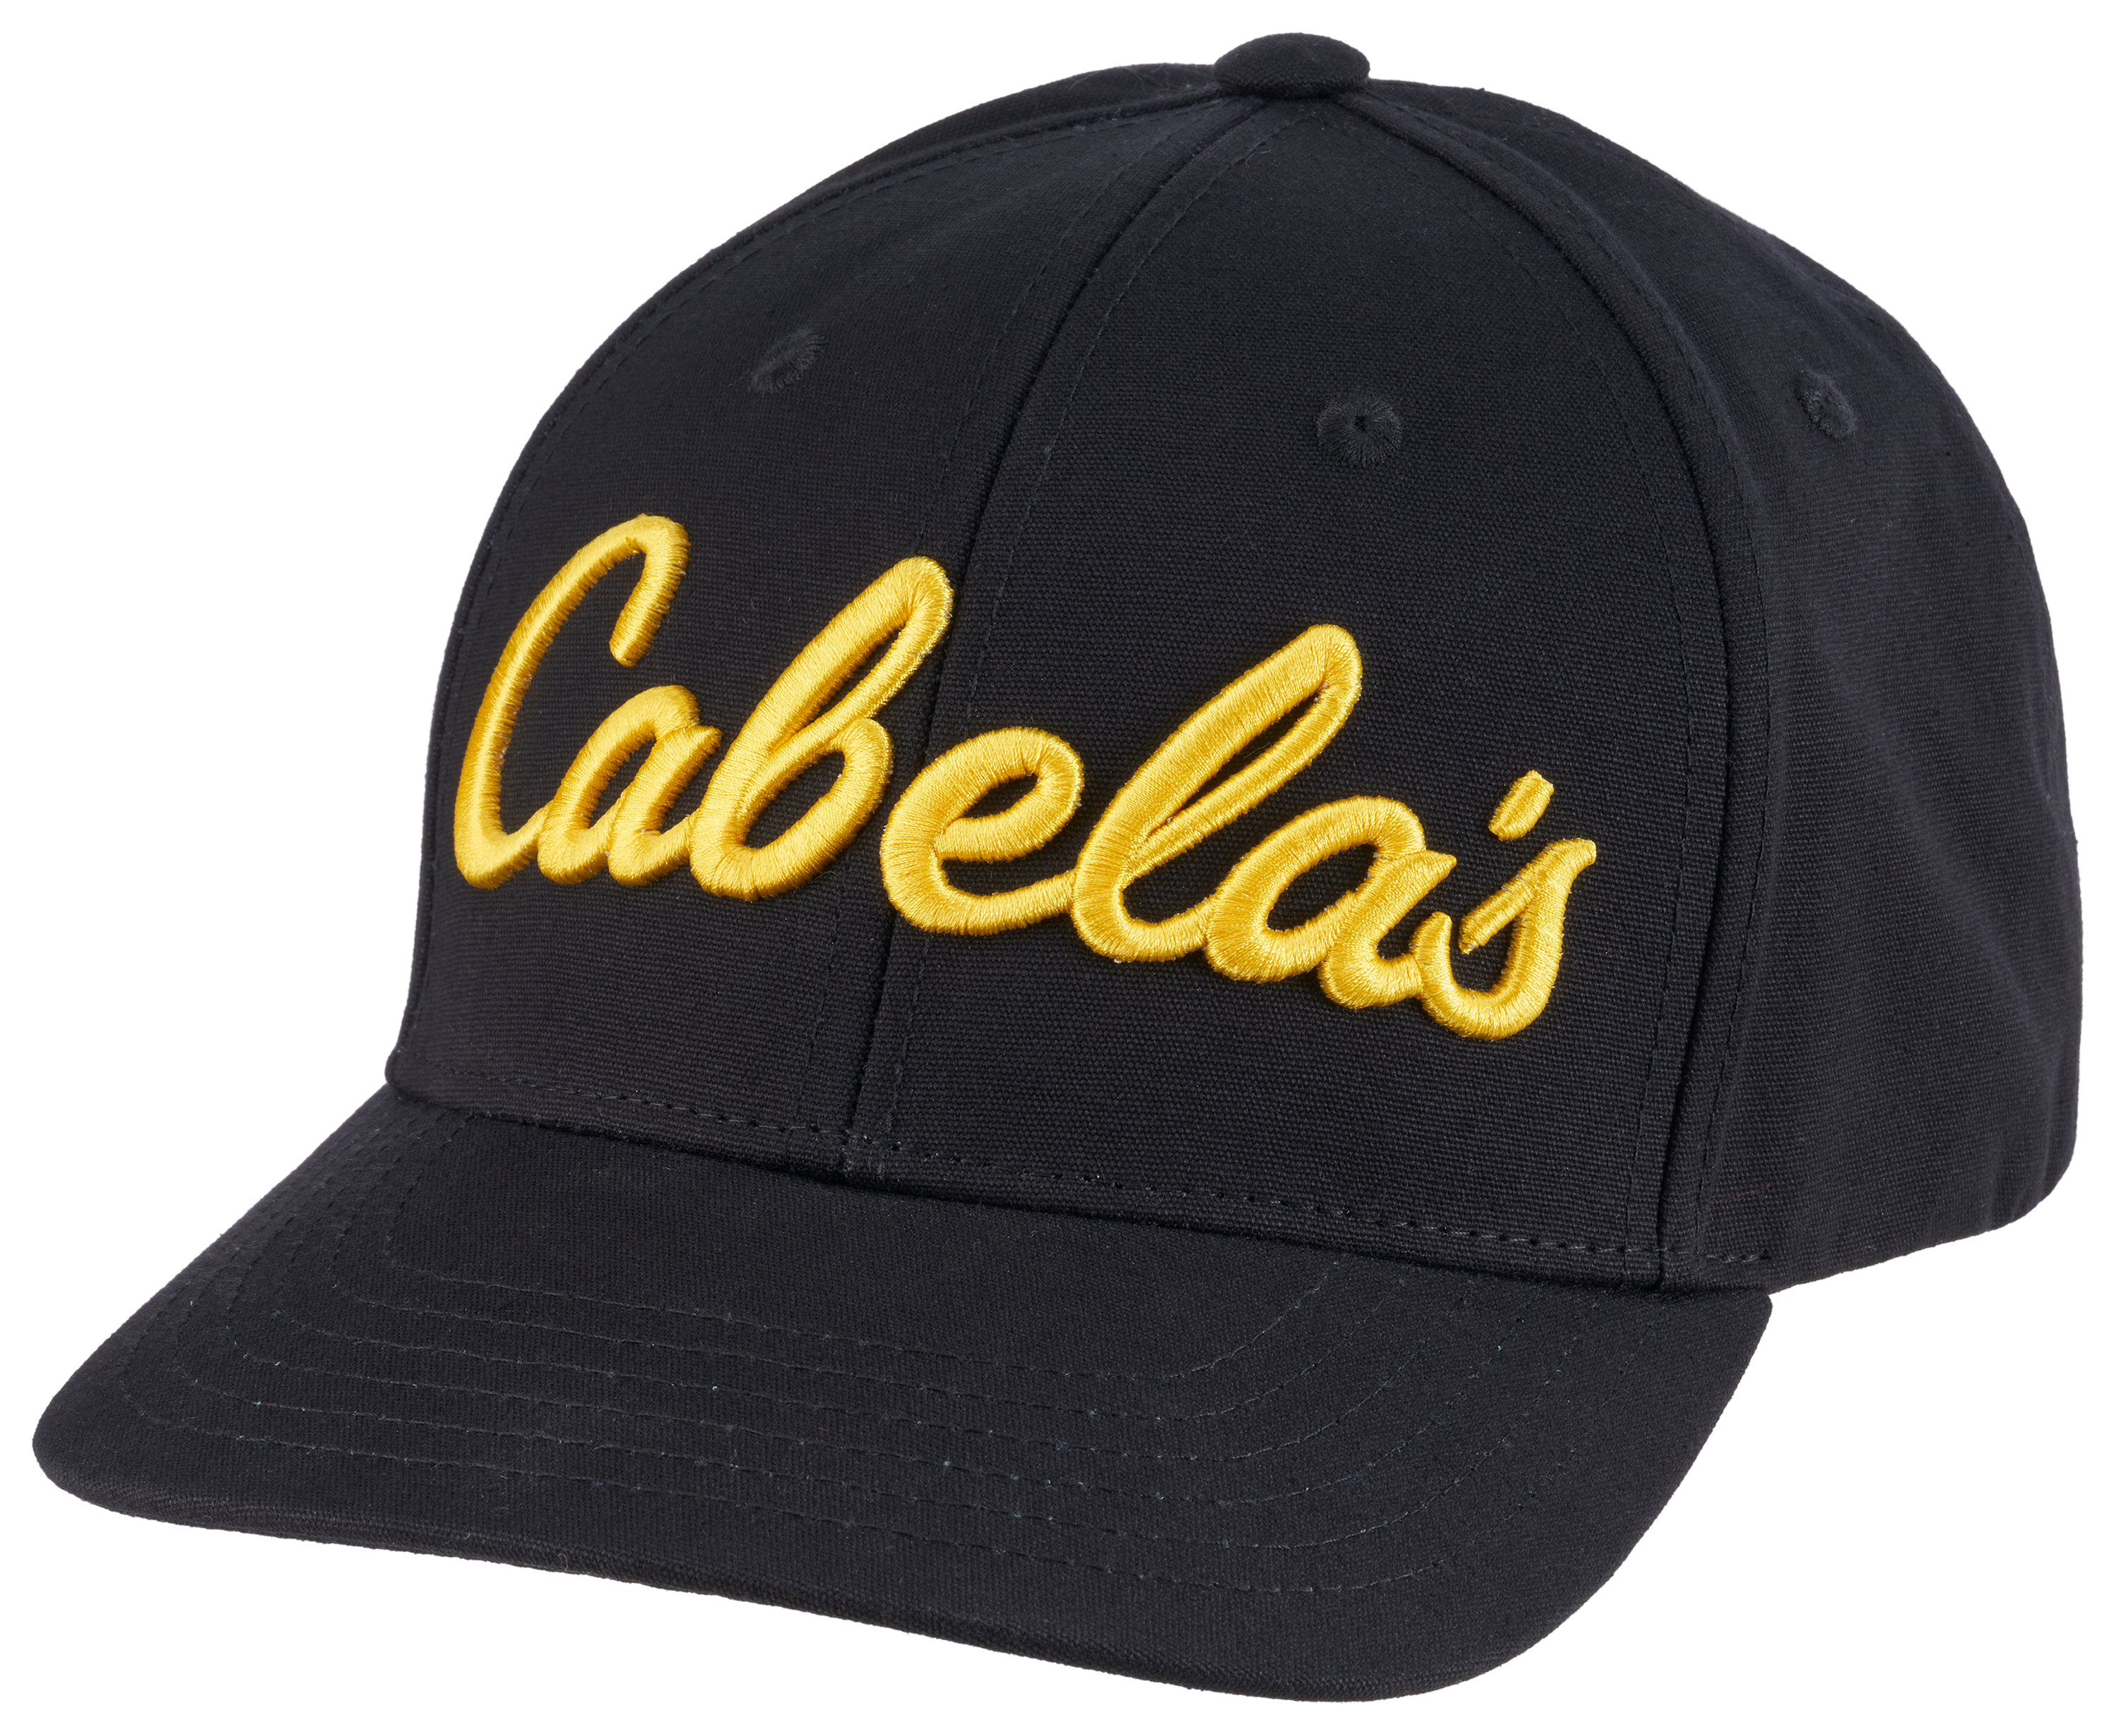 Cabelas Club Gray Baseball Hat Cap Hunting Fishing Sporting